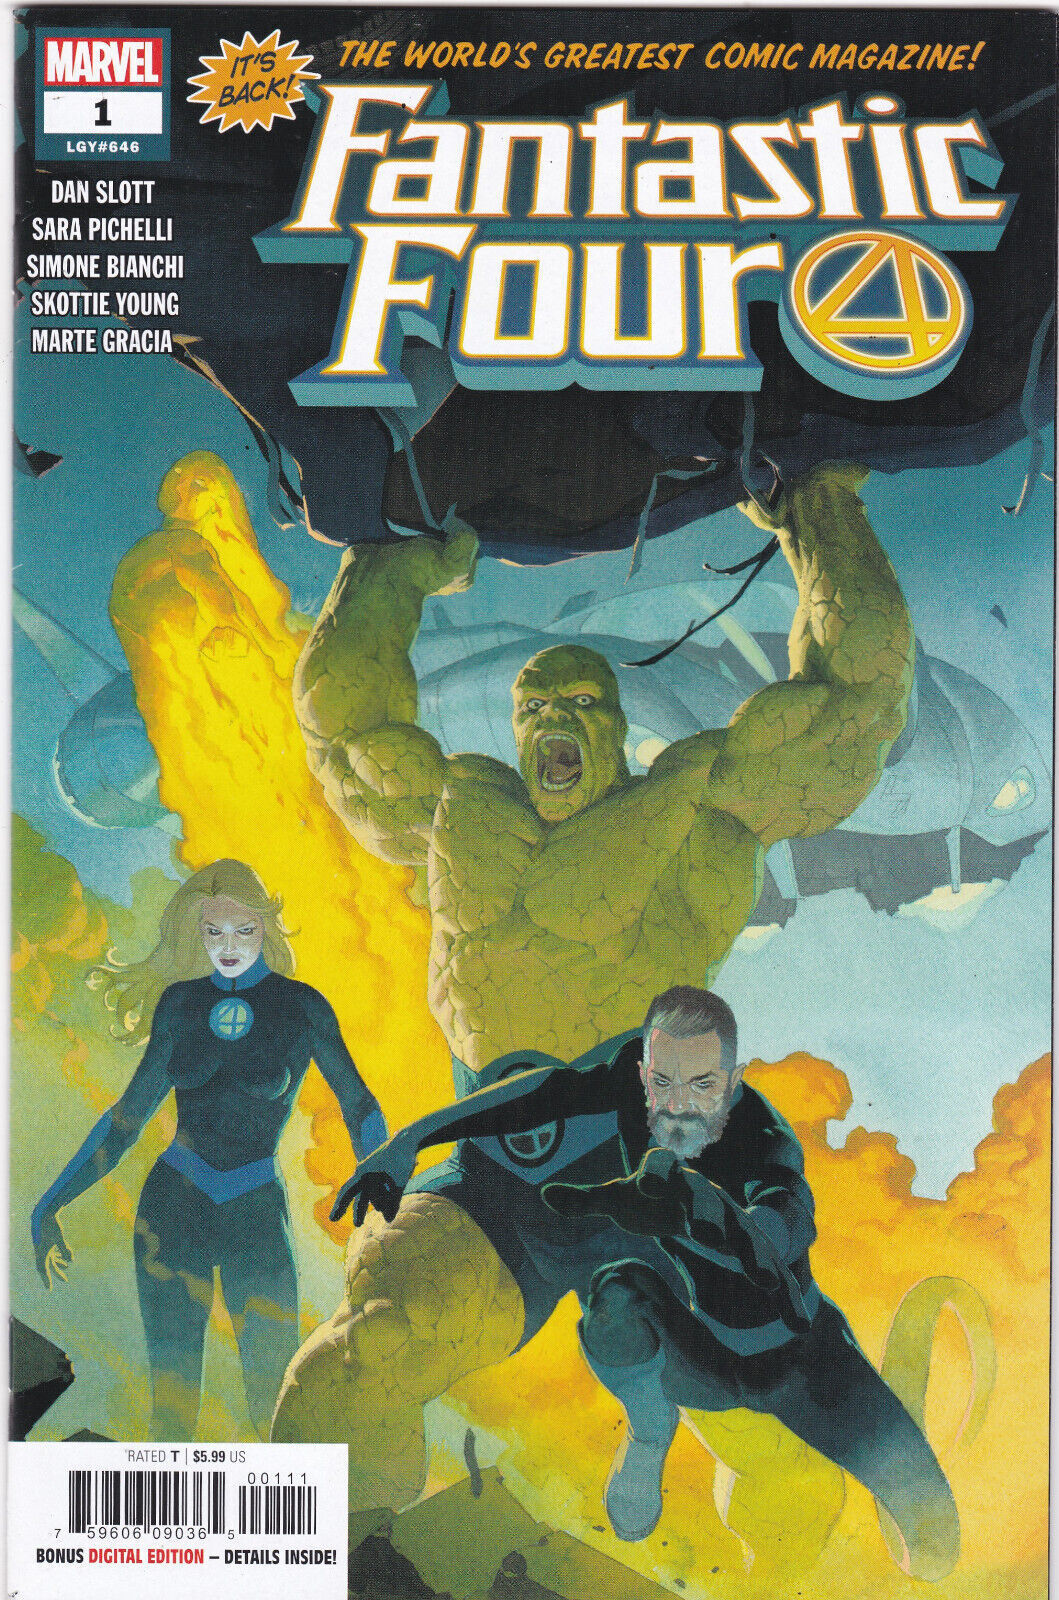 Fantastic Four #1 (Marvel, October 2018) High Grade